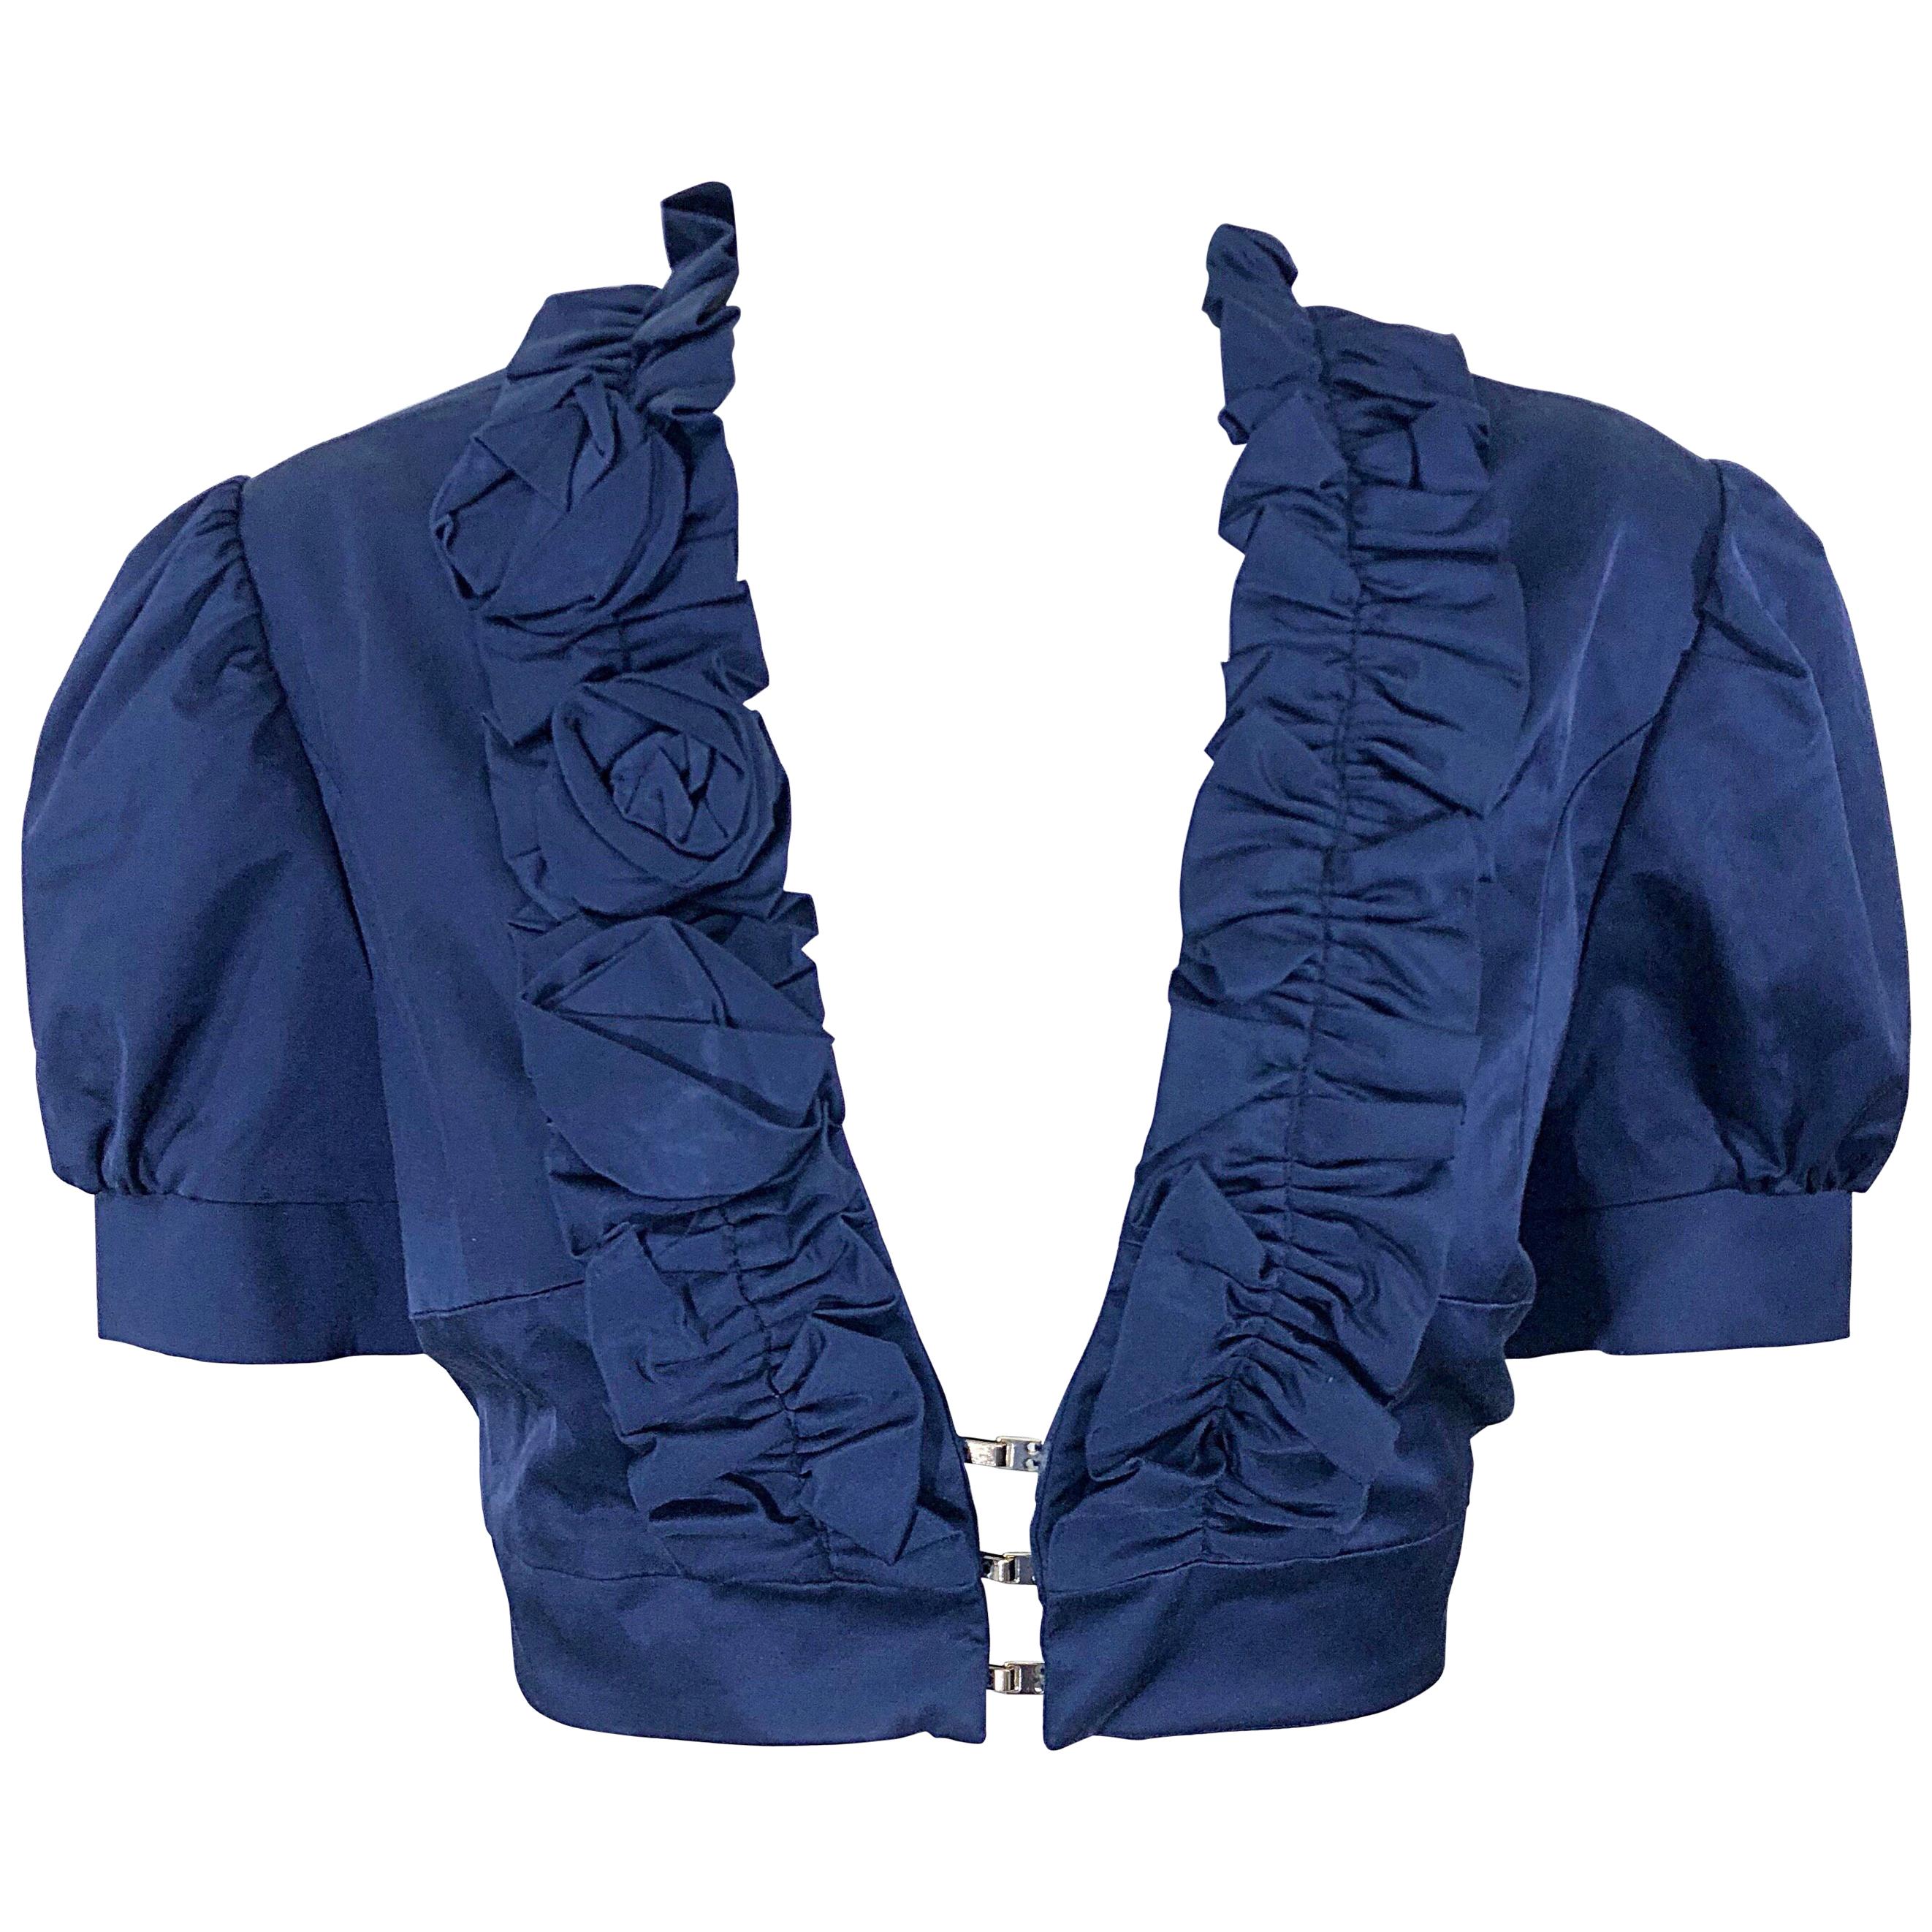 New Flavio Castellani Navy Blue Short Sleeve Rosette Cropped Bolero Jacket Top For Sale